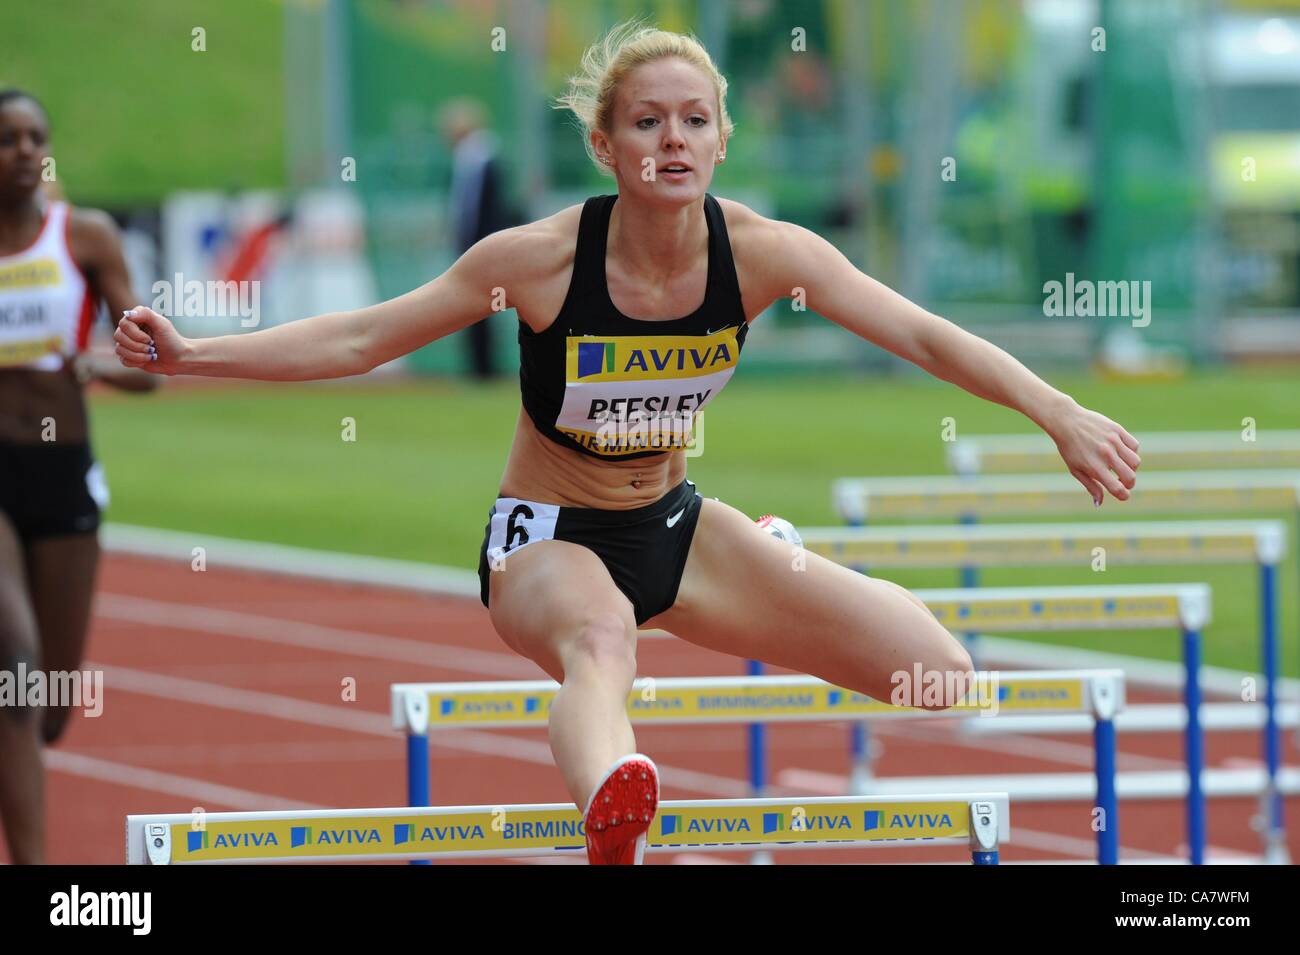 23.06.2012 Birmingham ENGLAND Womens 400m Hurdles Heats, Meghan Beesley in action during the Aviva Trials at the Alexandra Stadium. Stock Photo